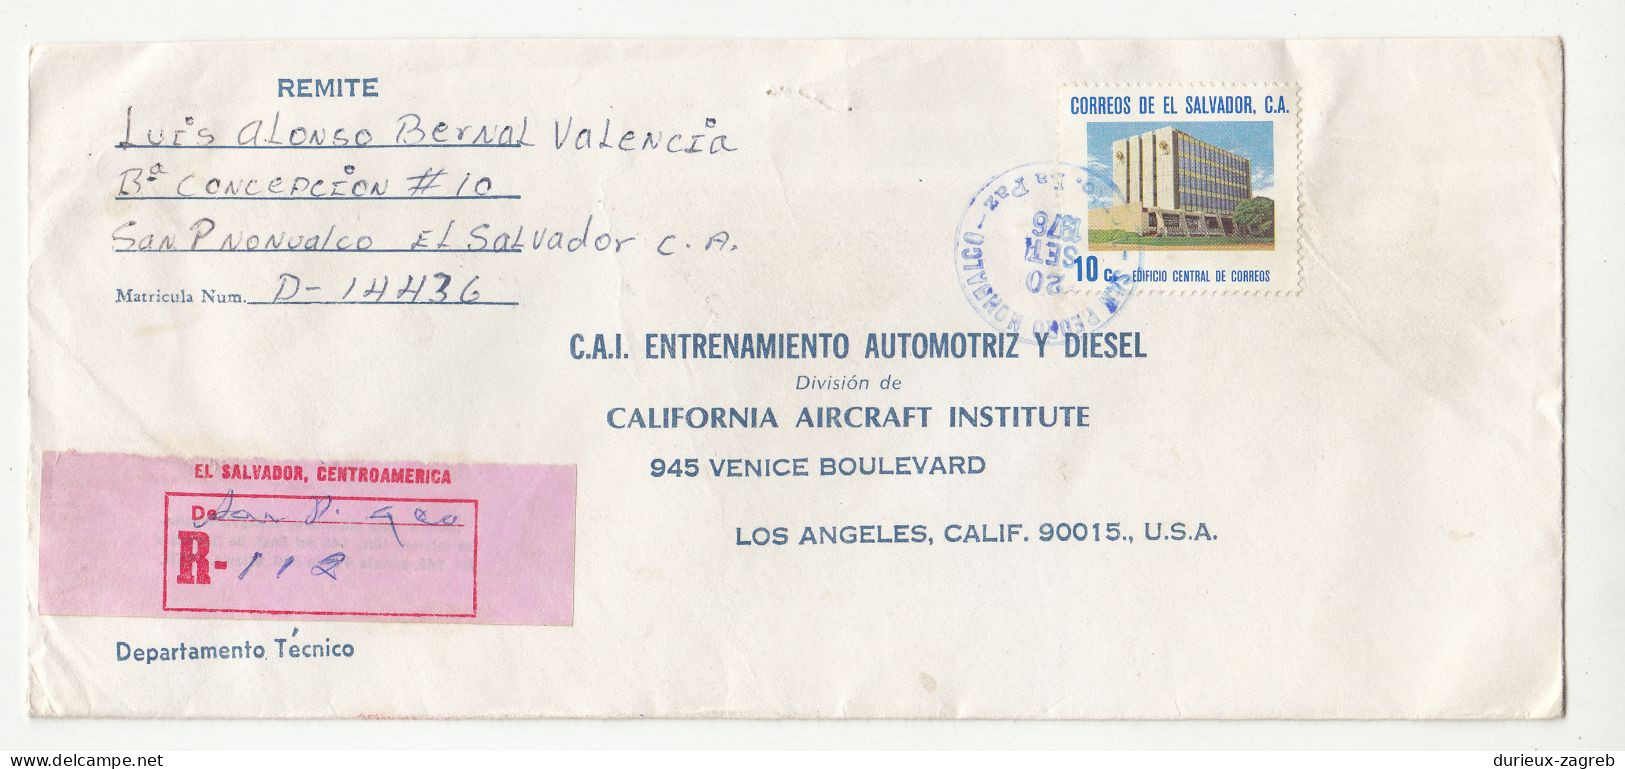 El Salvador Letter Cover Posted Registered 1976 To USA B240301 - Salvador